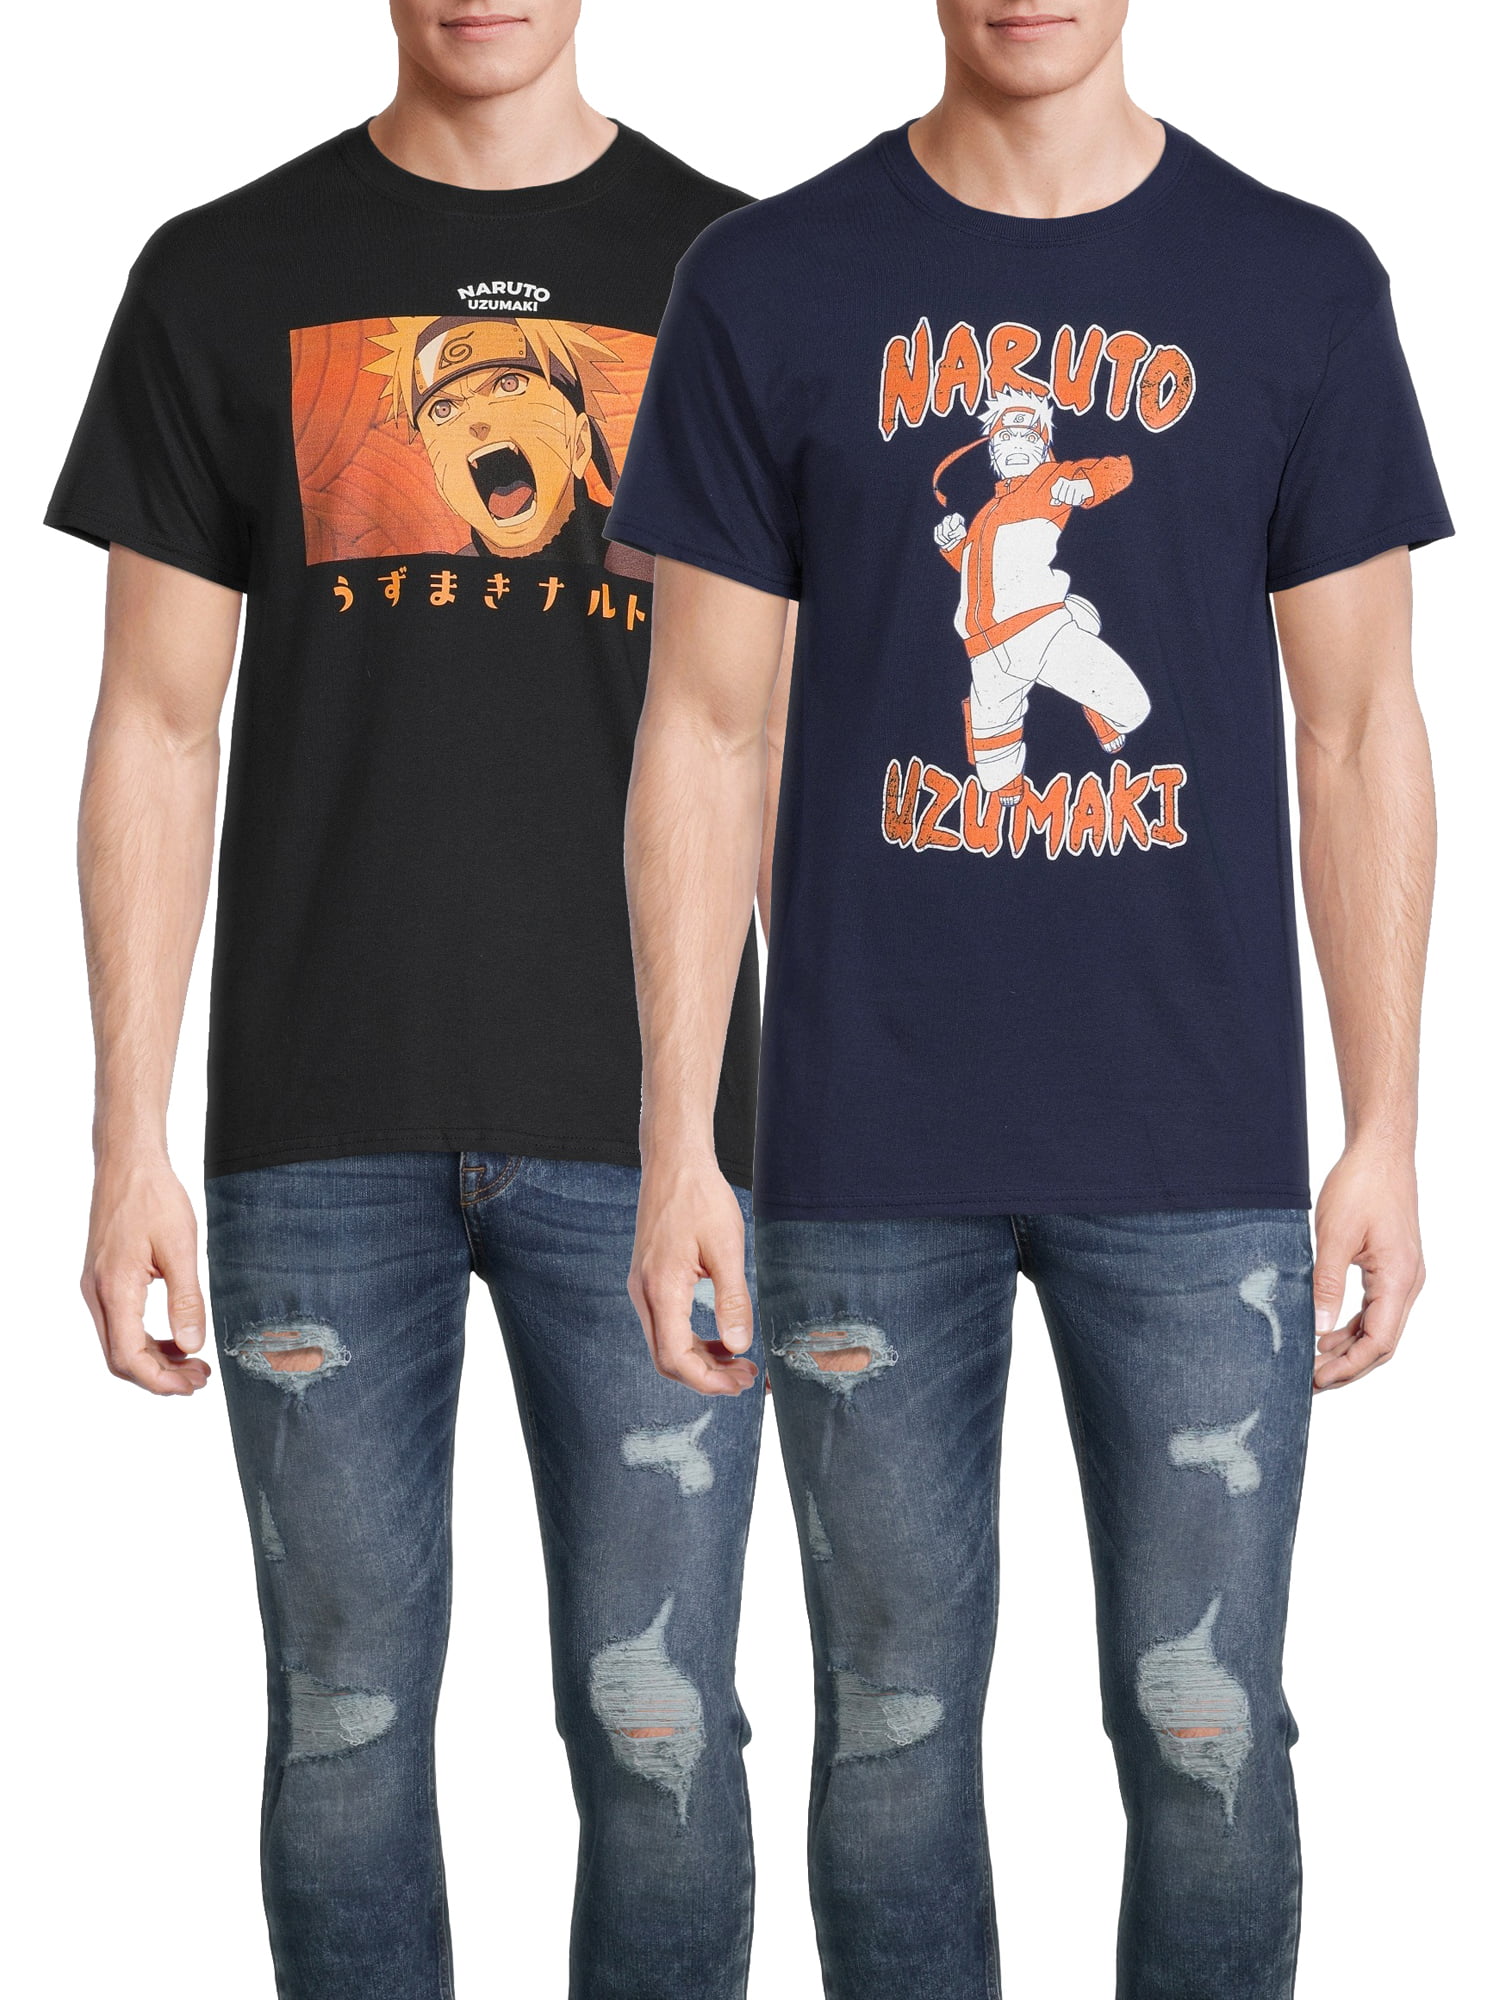 2-Pack Naruto Men's & Big Men's Uzumaki Anime Graphic Tee Shirts (Black, Sizes S-3XL) $10 + Free S&H w/ Walmart+ or $35+